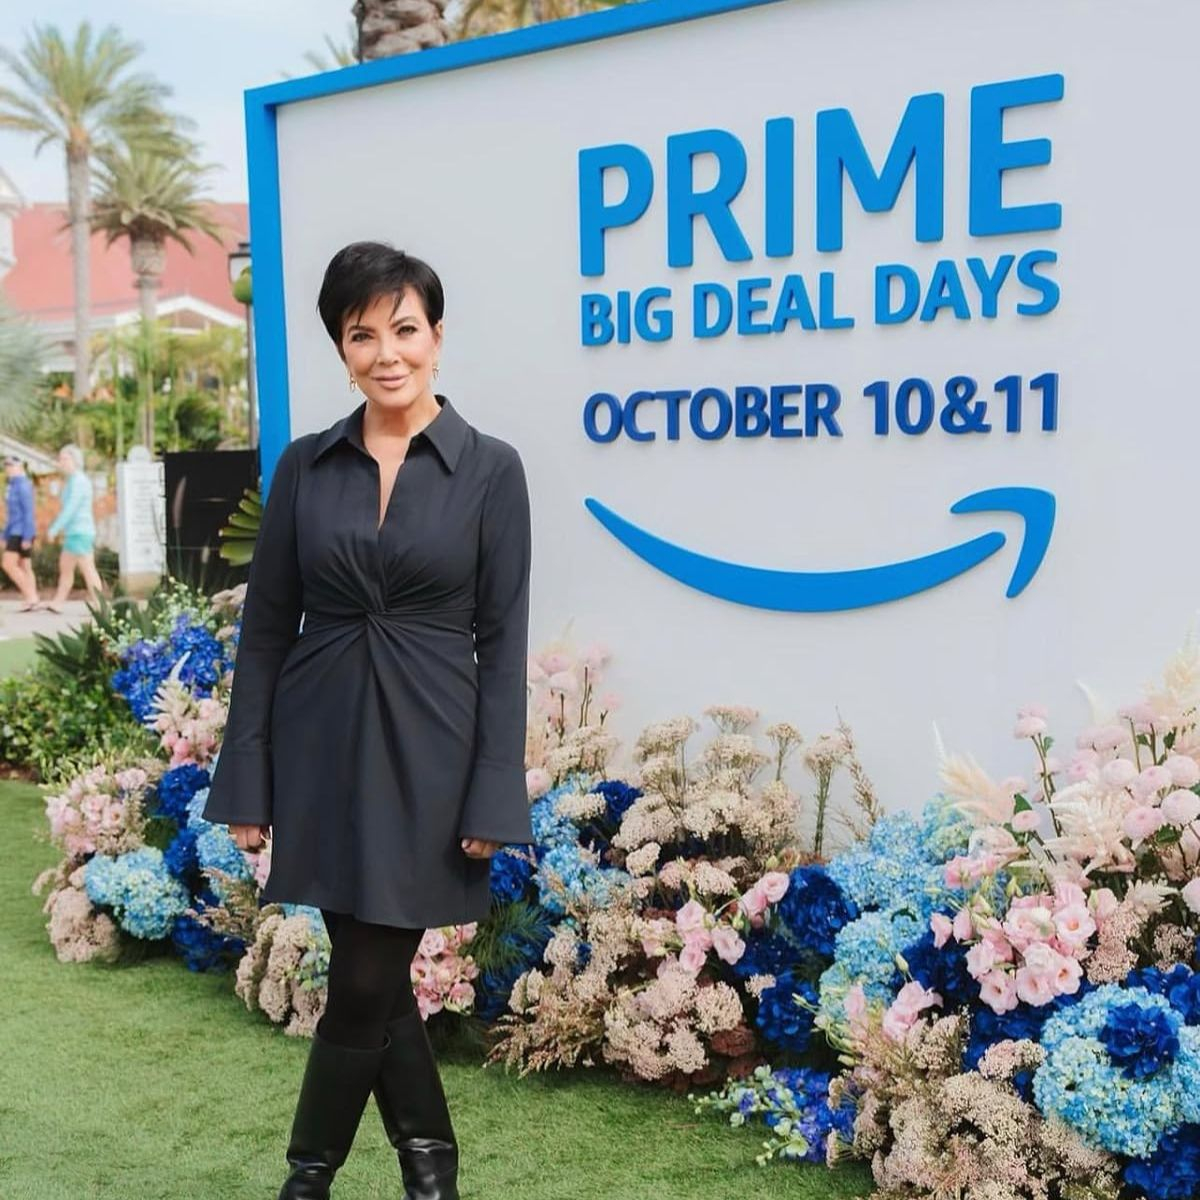 s Prime Big Deal Days event is October 10-11